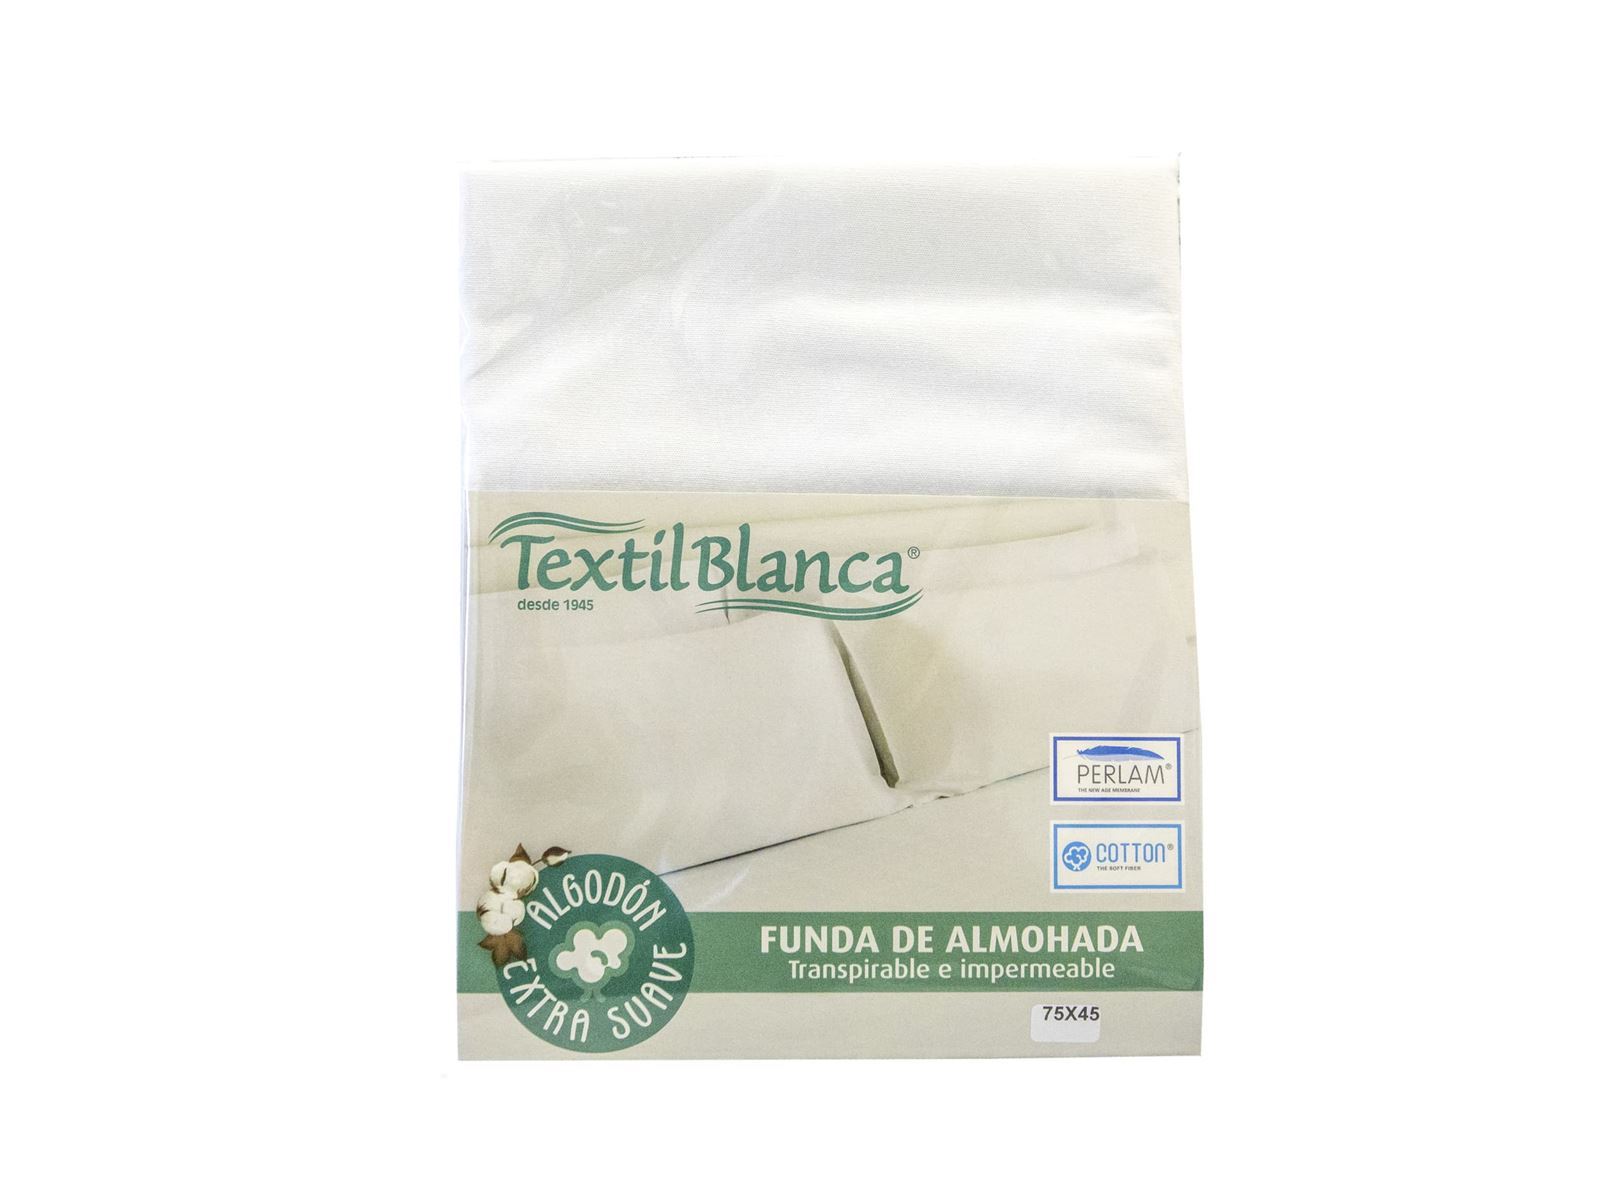 Protector almohada impermeable Cotton - Imagen 1